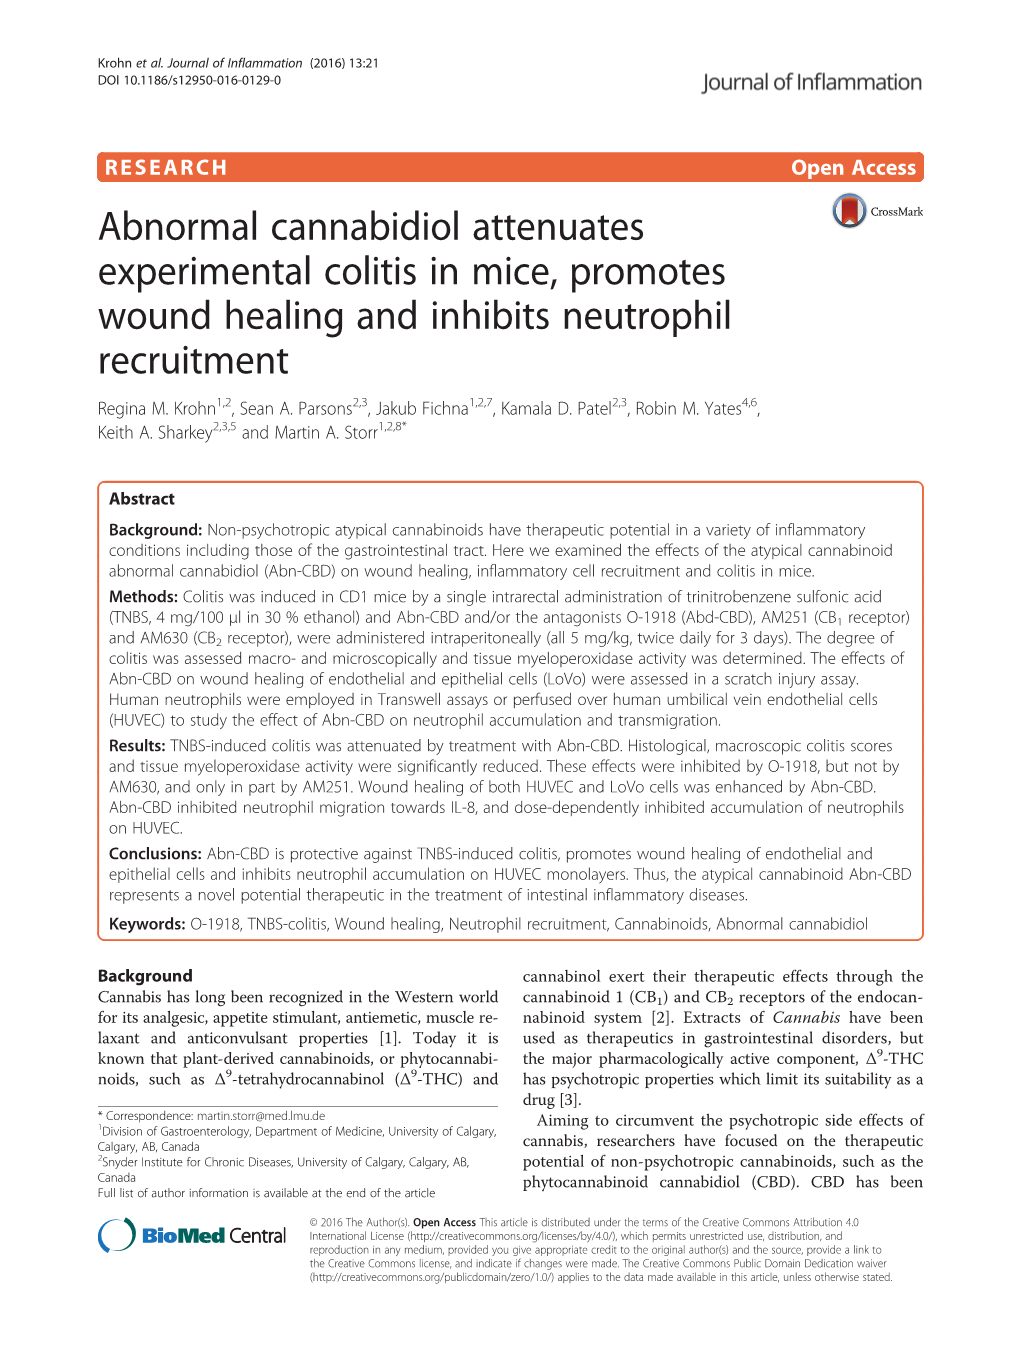 Abnormal Cannabidiol Attenuates Experimental Colitis in Mice, Promotes Wound Healing and Inhibits Neutrophil Recruitment Regina M